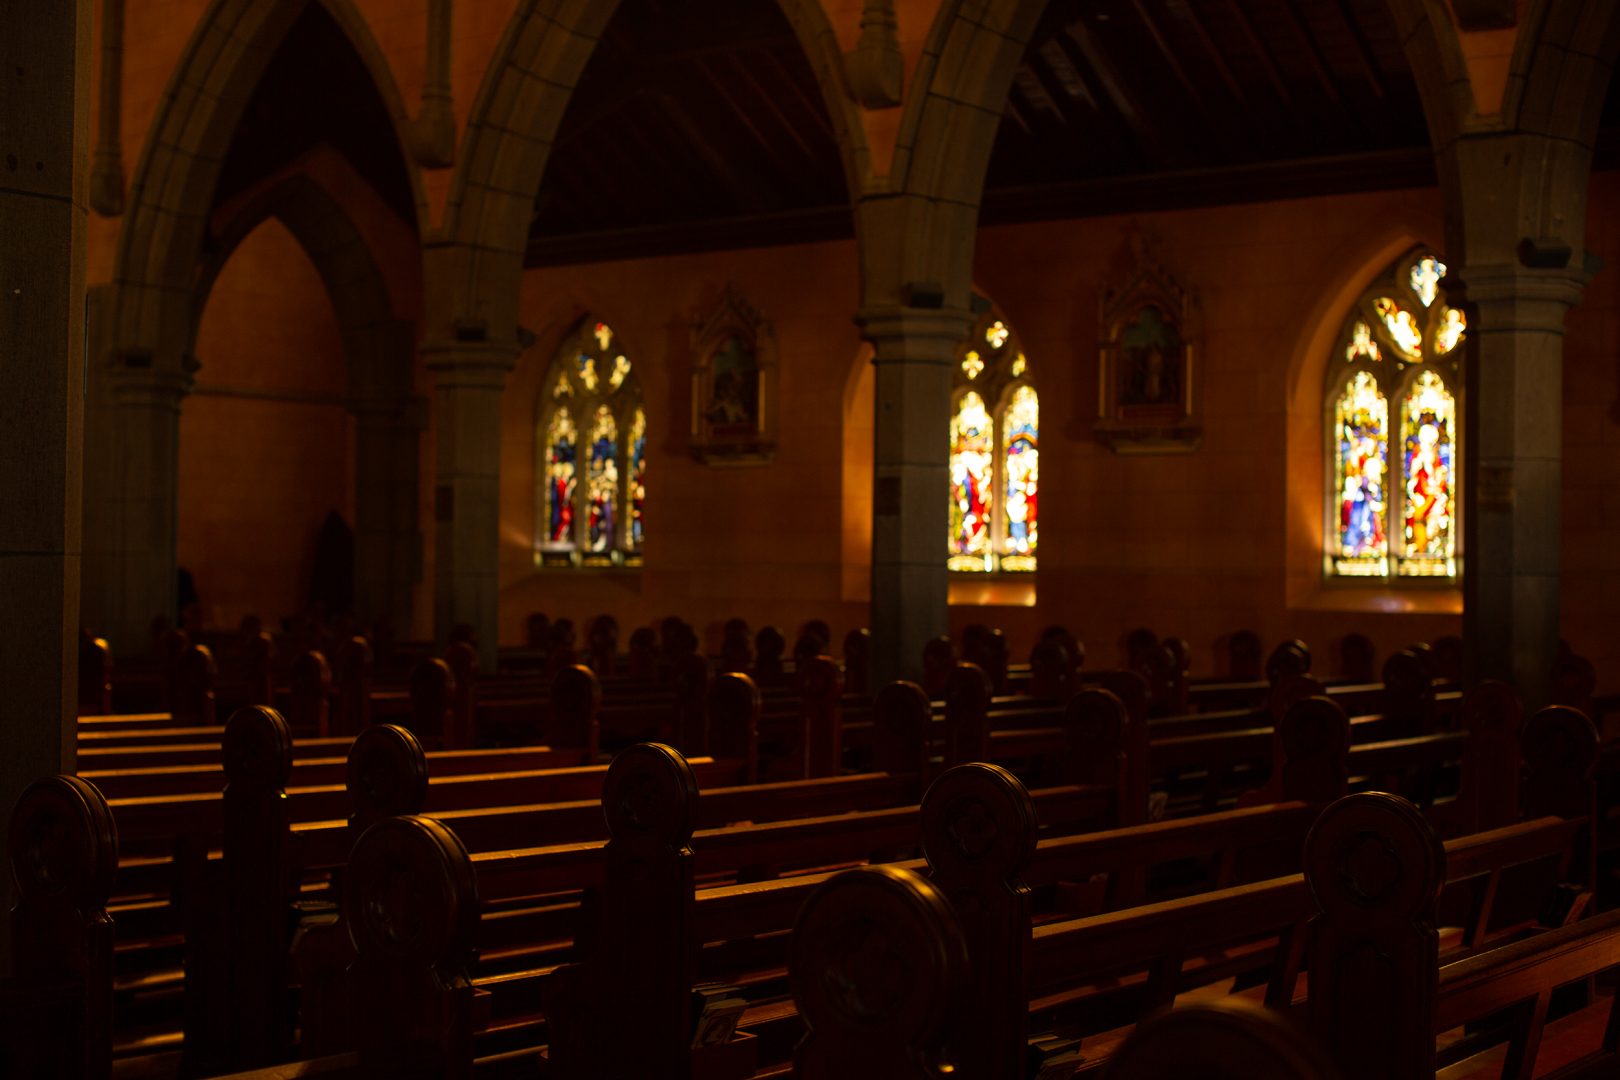 Interior of St Patricks Catholic Cathedral, Ballarat, Victoria, AustraliaInterior of St Patricks Catholic Cathedral, Ballarat, Victoria, Australia